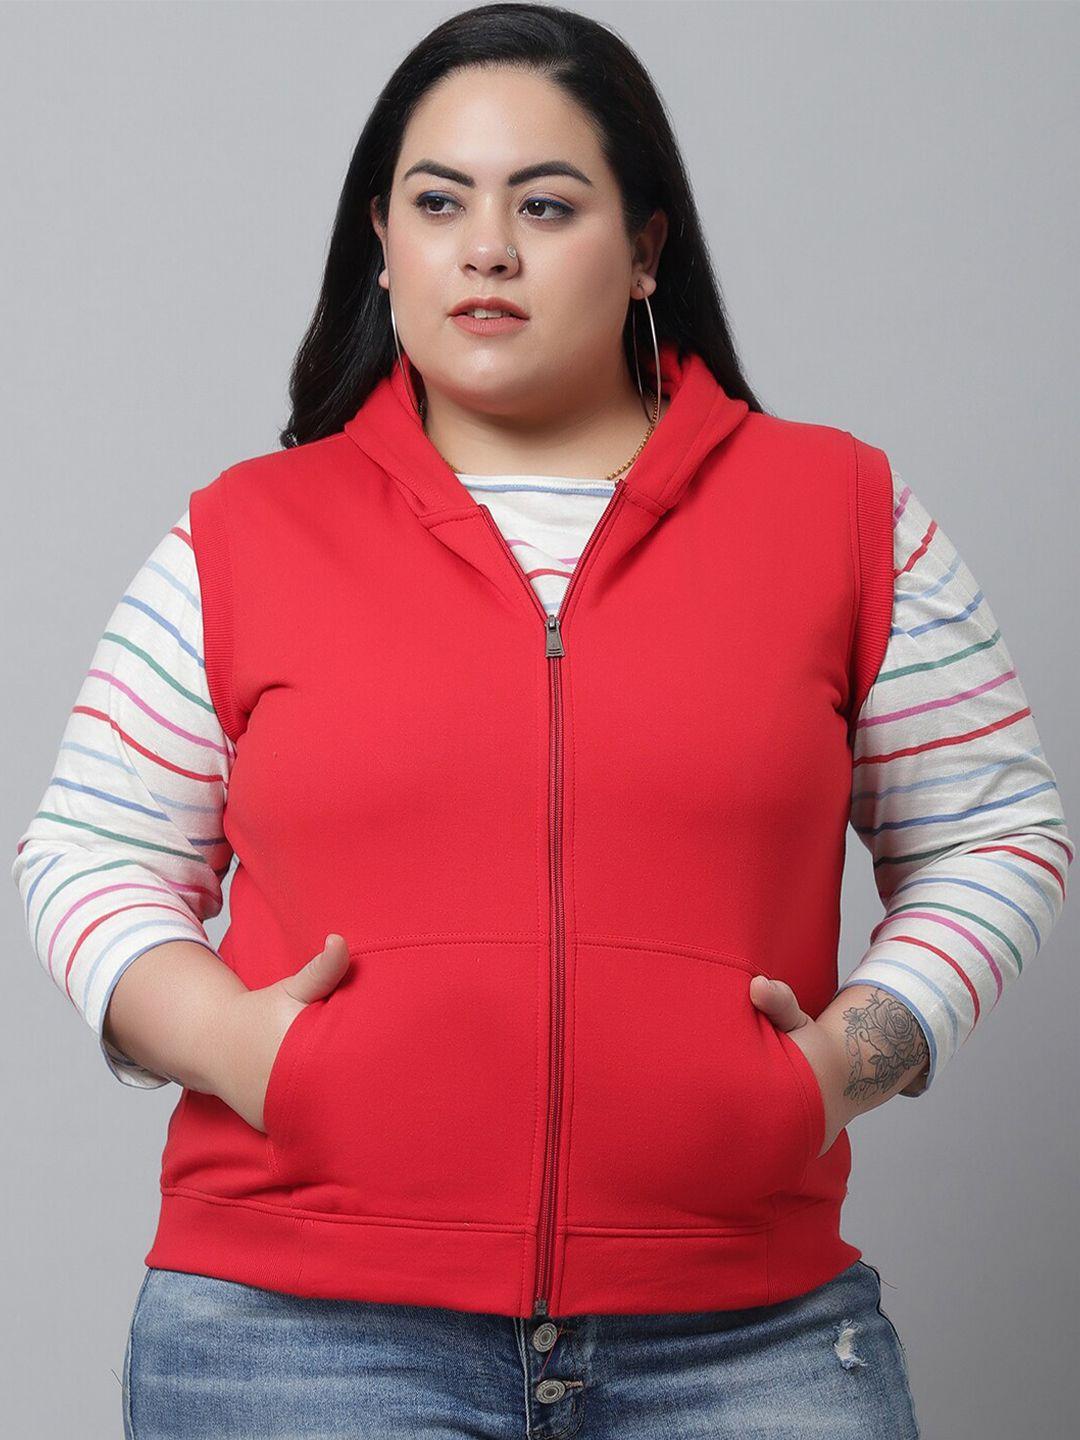 unaone women plus size red hooded sweatshirt